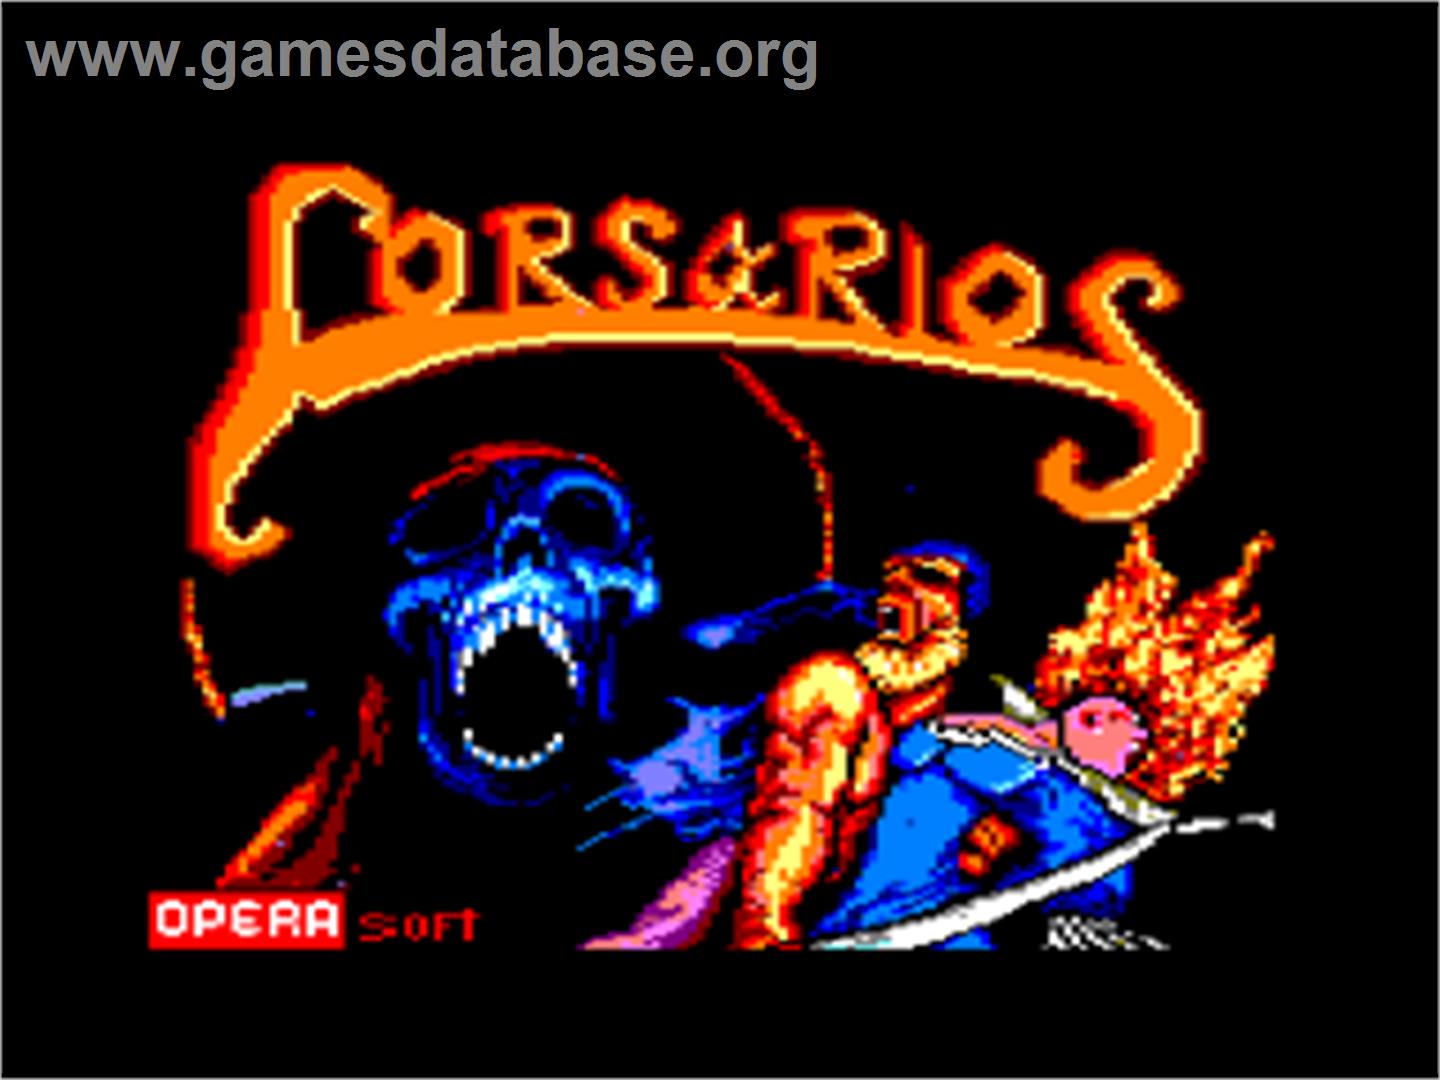 Corsarios - Amstrad CPC - Artwork - Title Screen